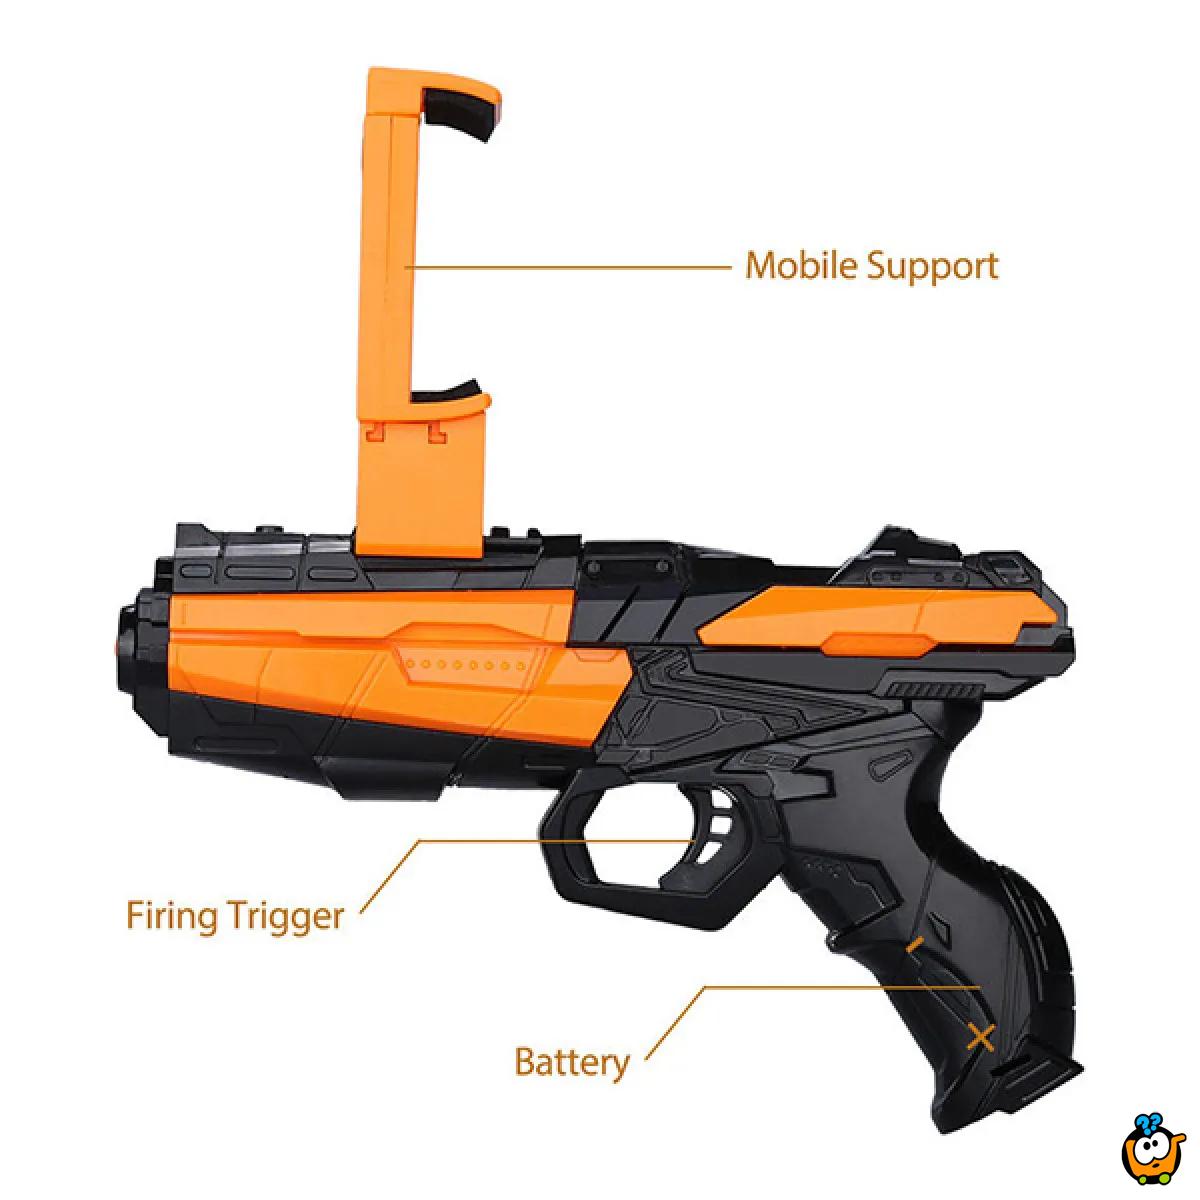 AR Toy Gun - Pištolj za virtualno igranje igrica na telefonu